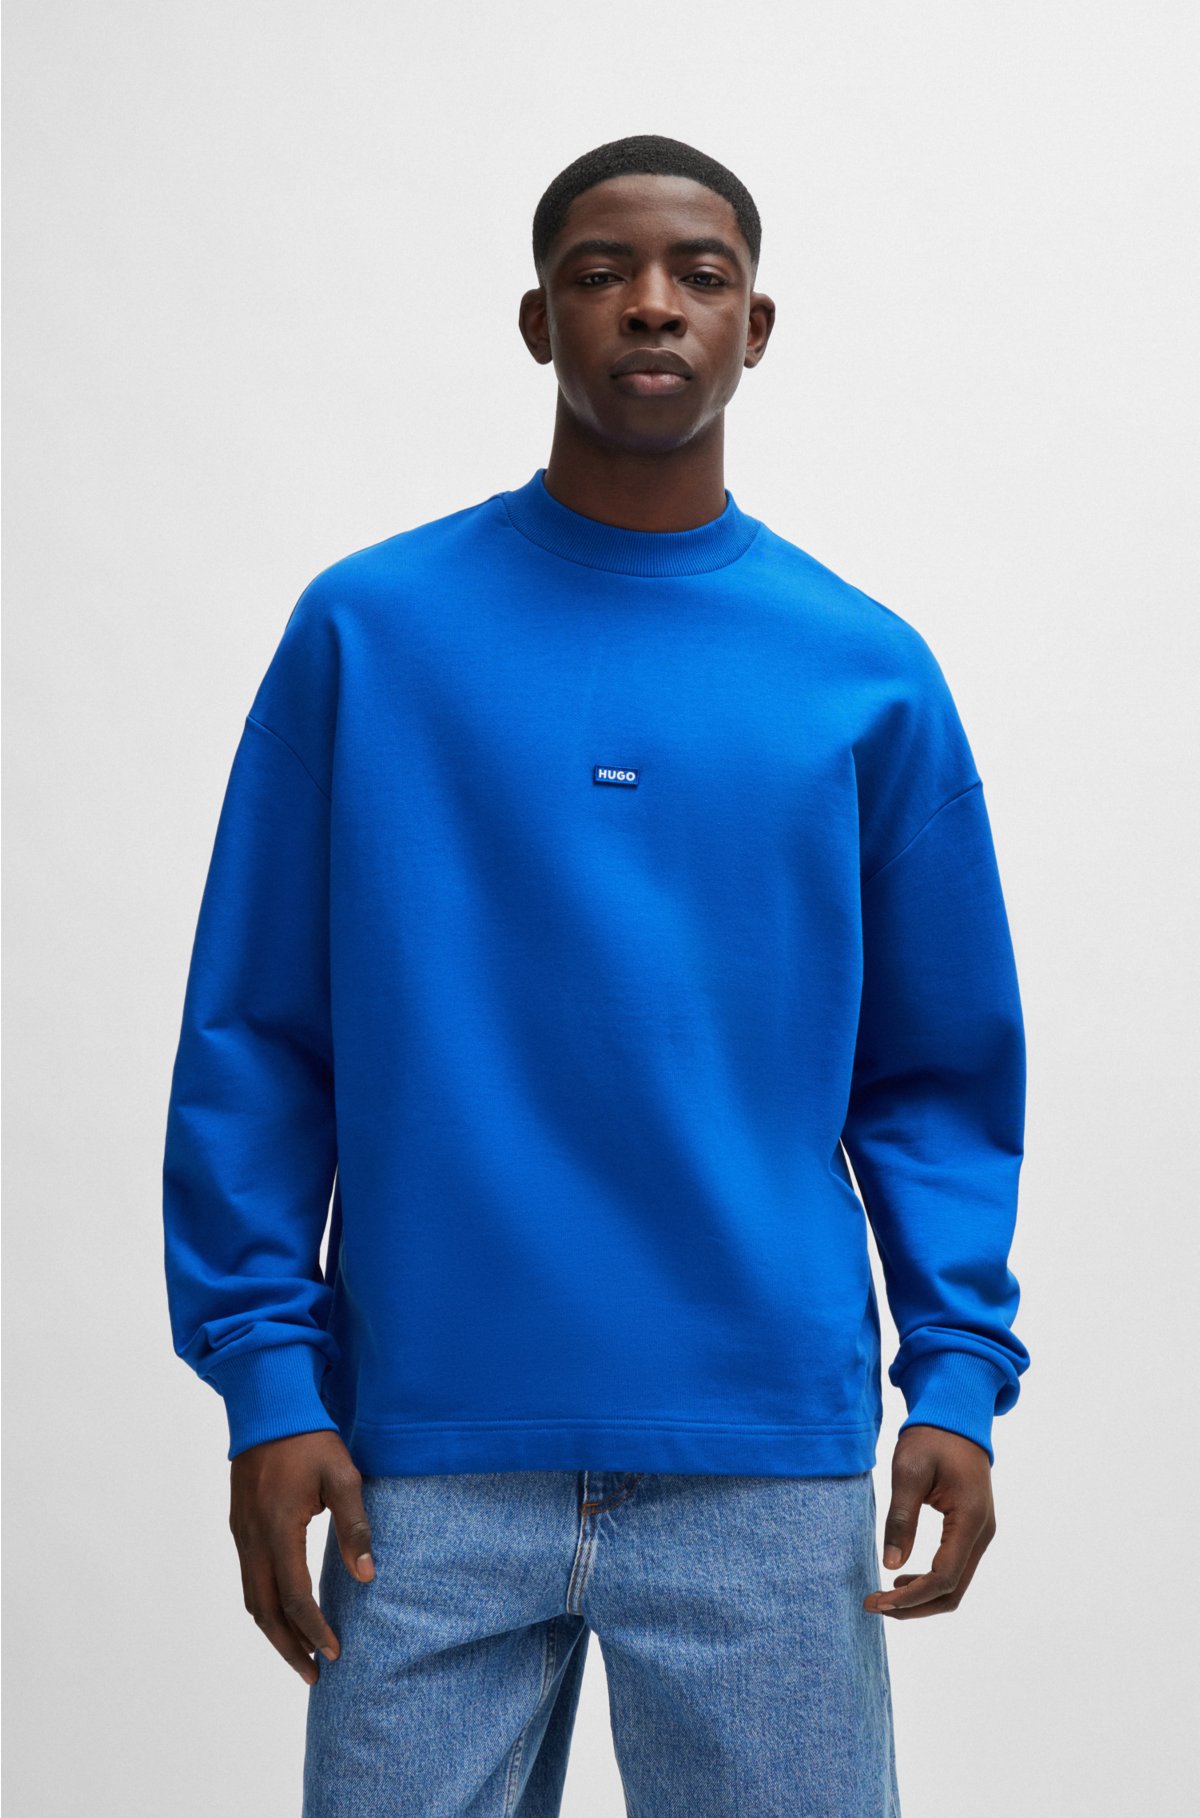 Cotton-terry sweatshirt with blue logo label